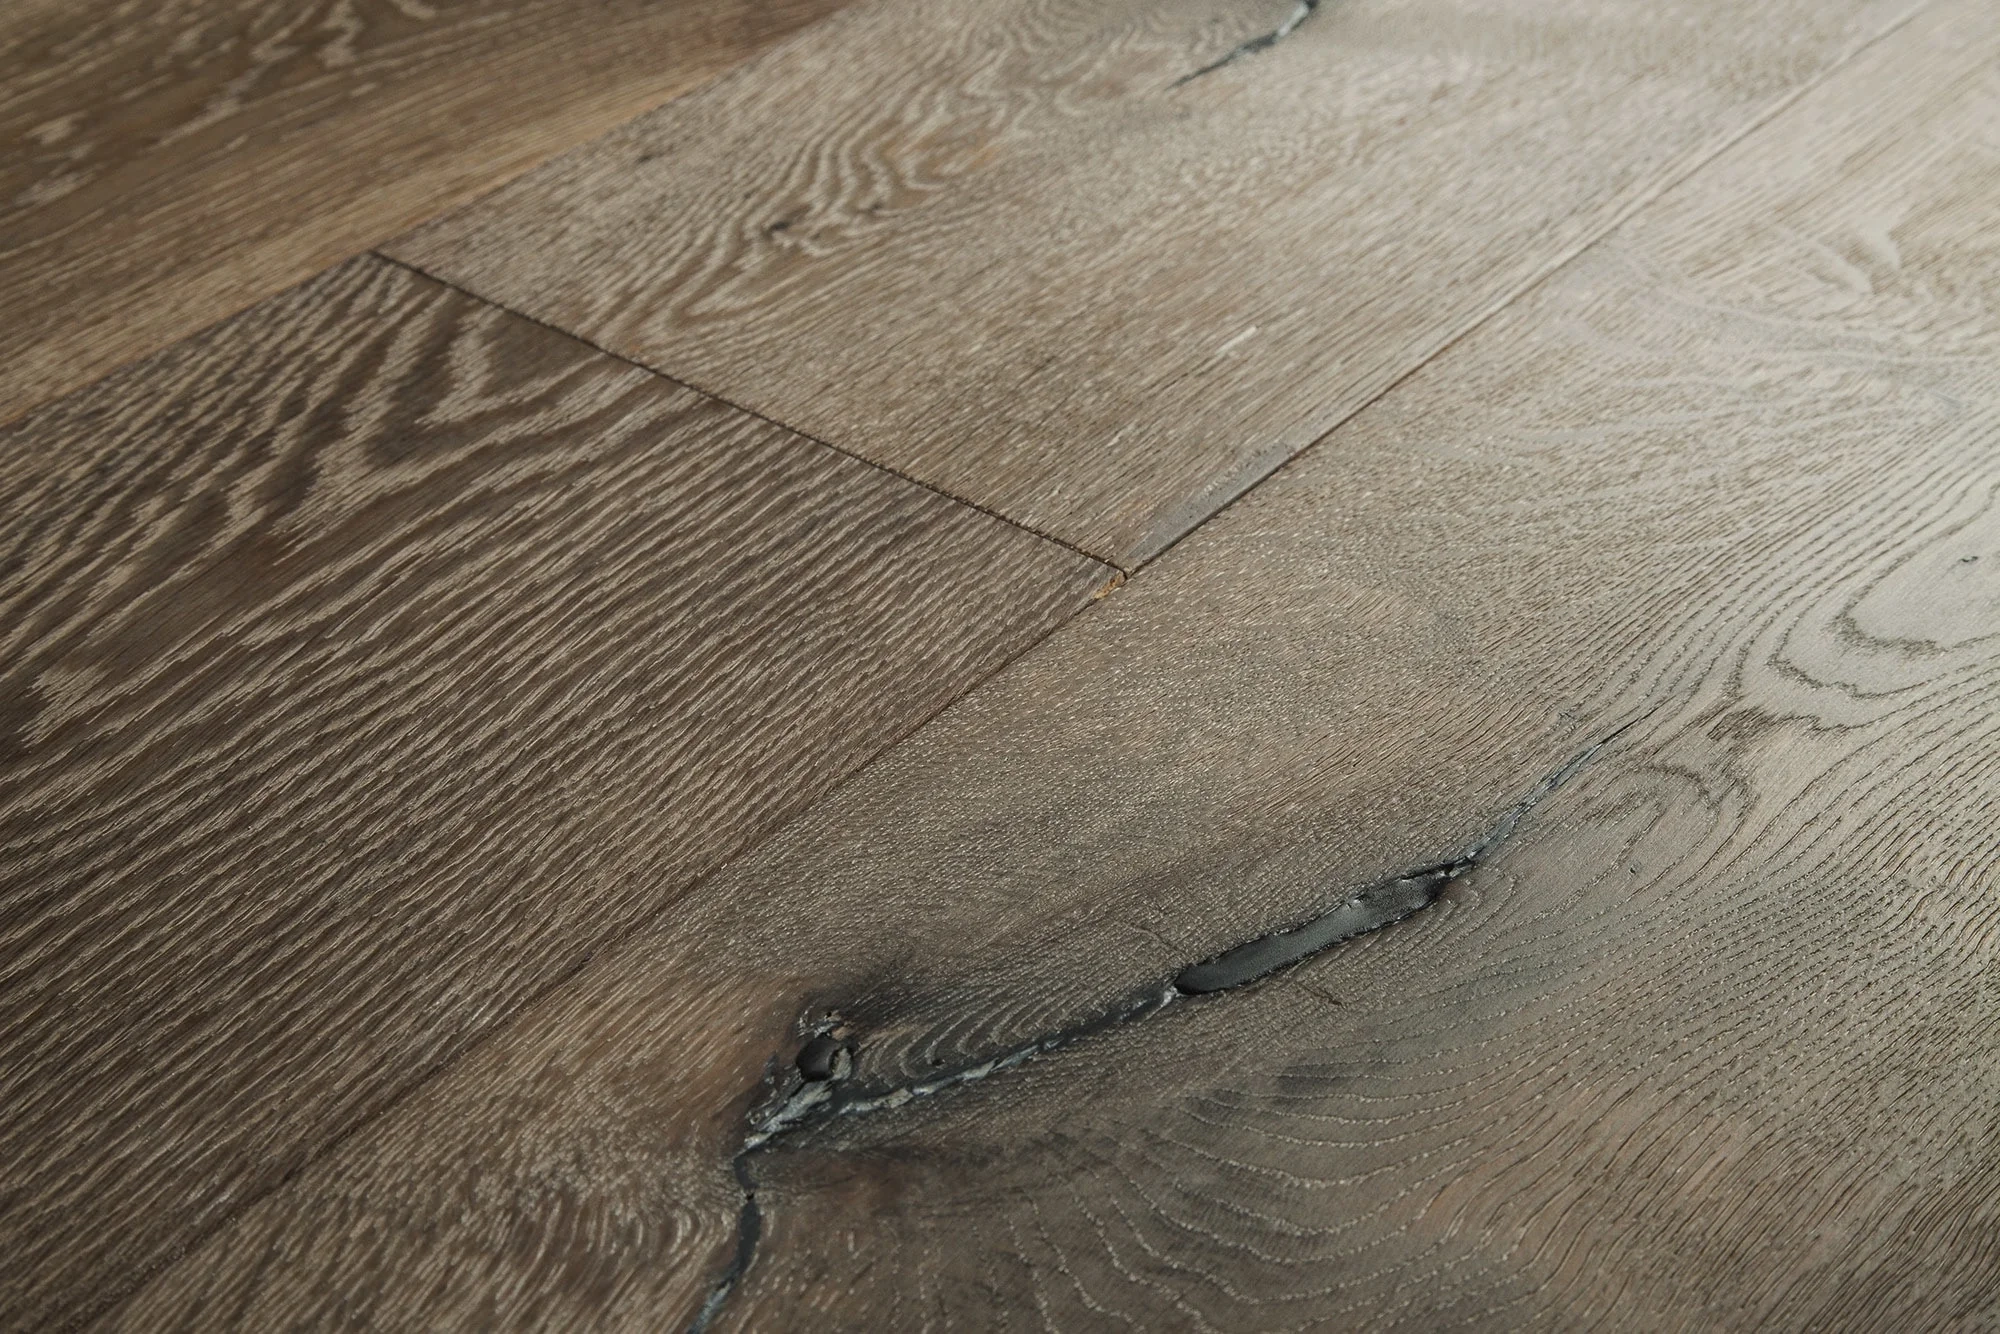 Smoked Oak Plank 1900x190mm plywood flooring in UK